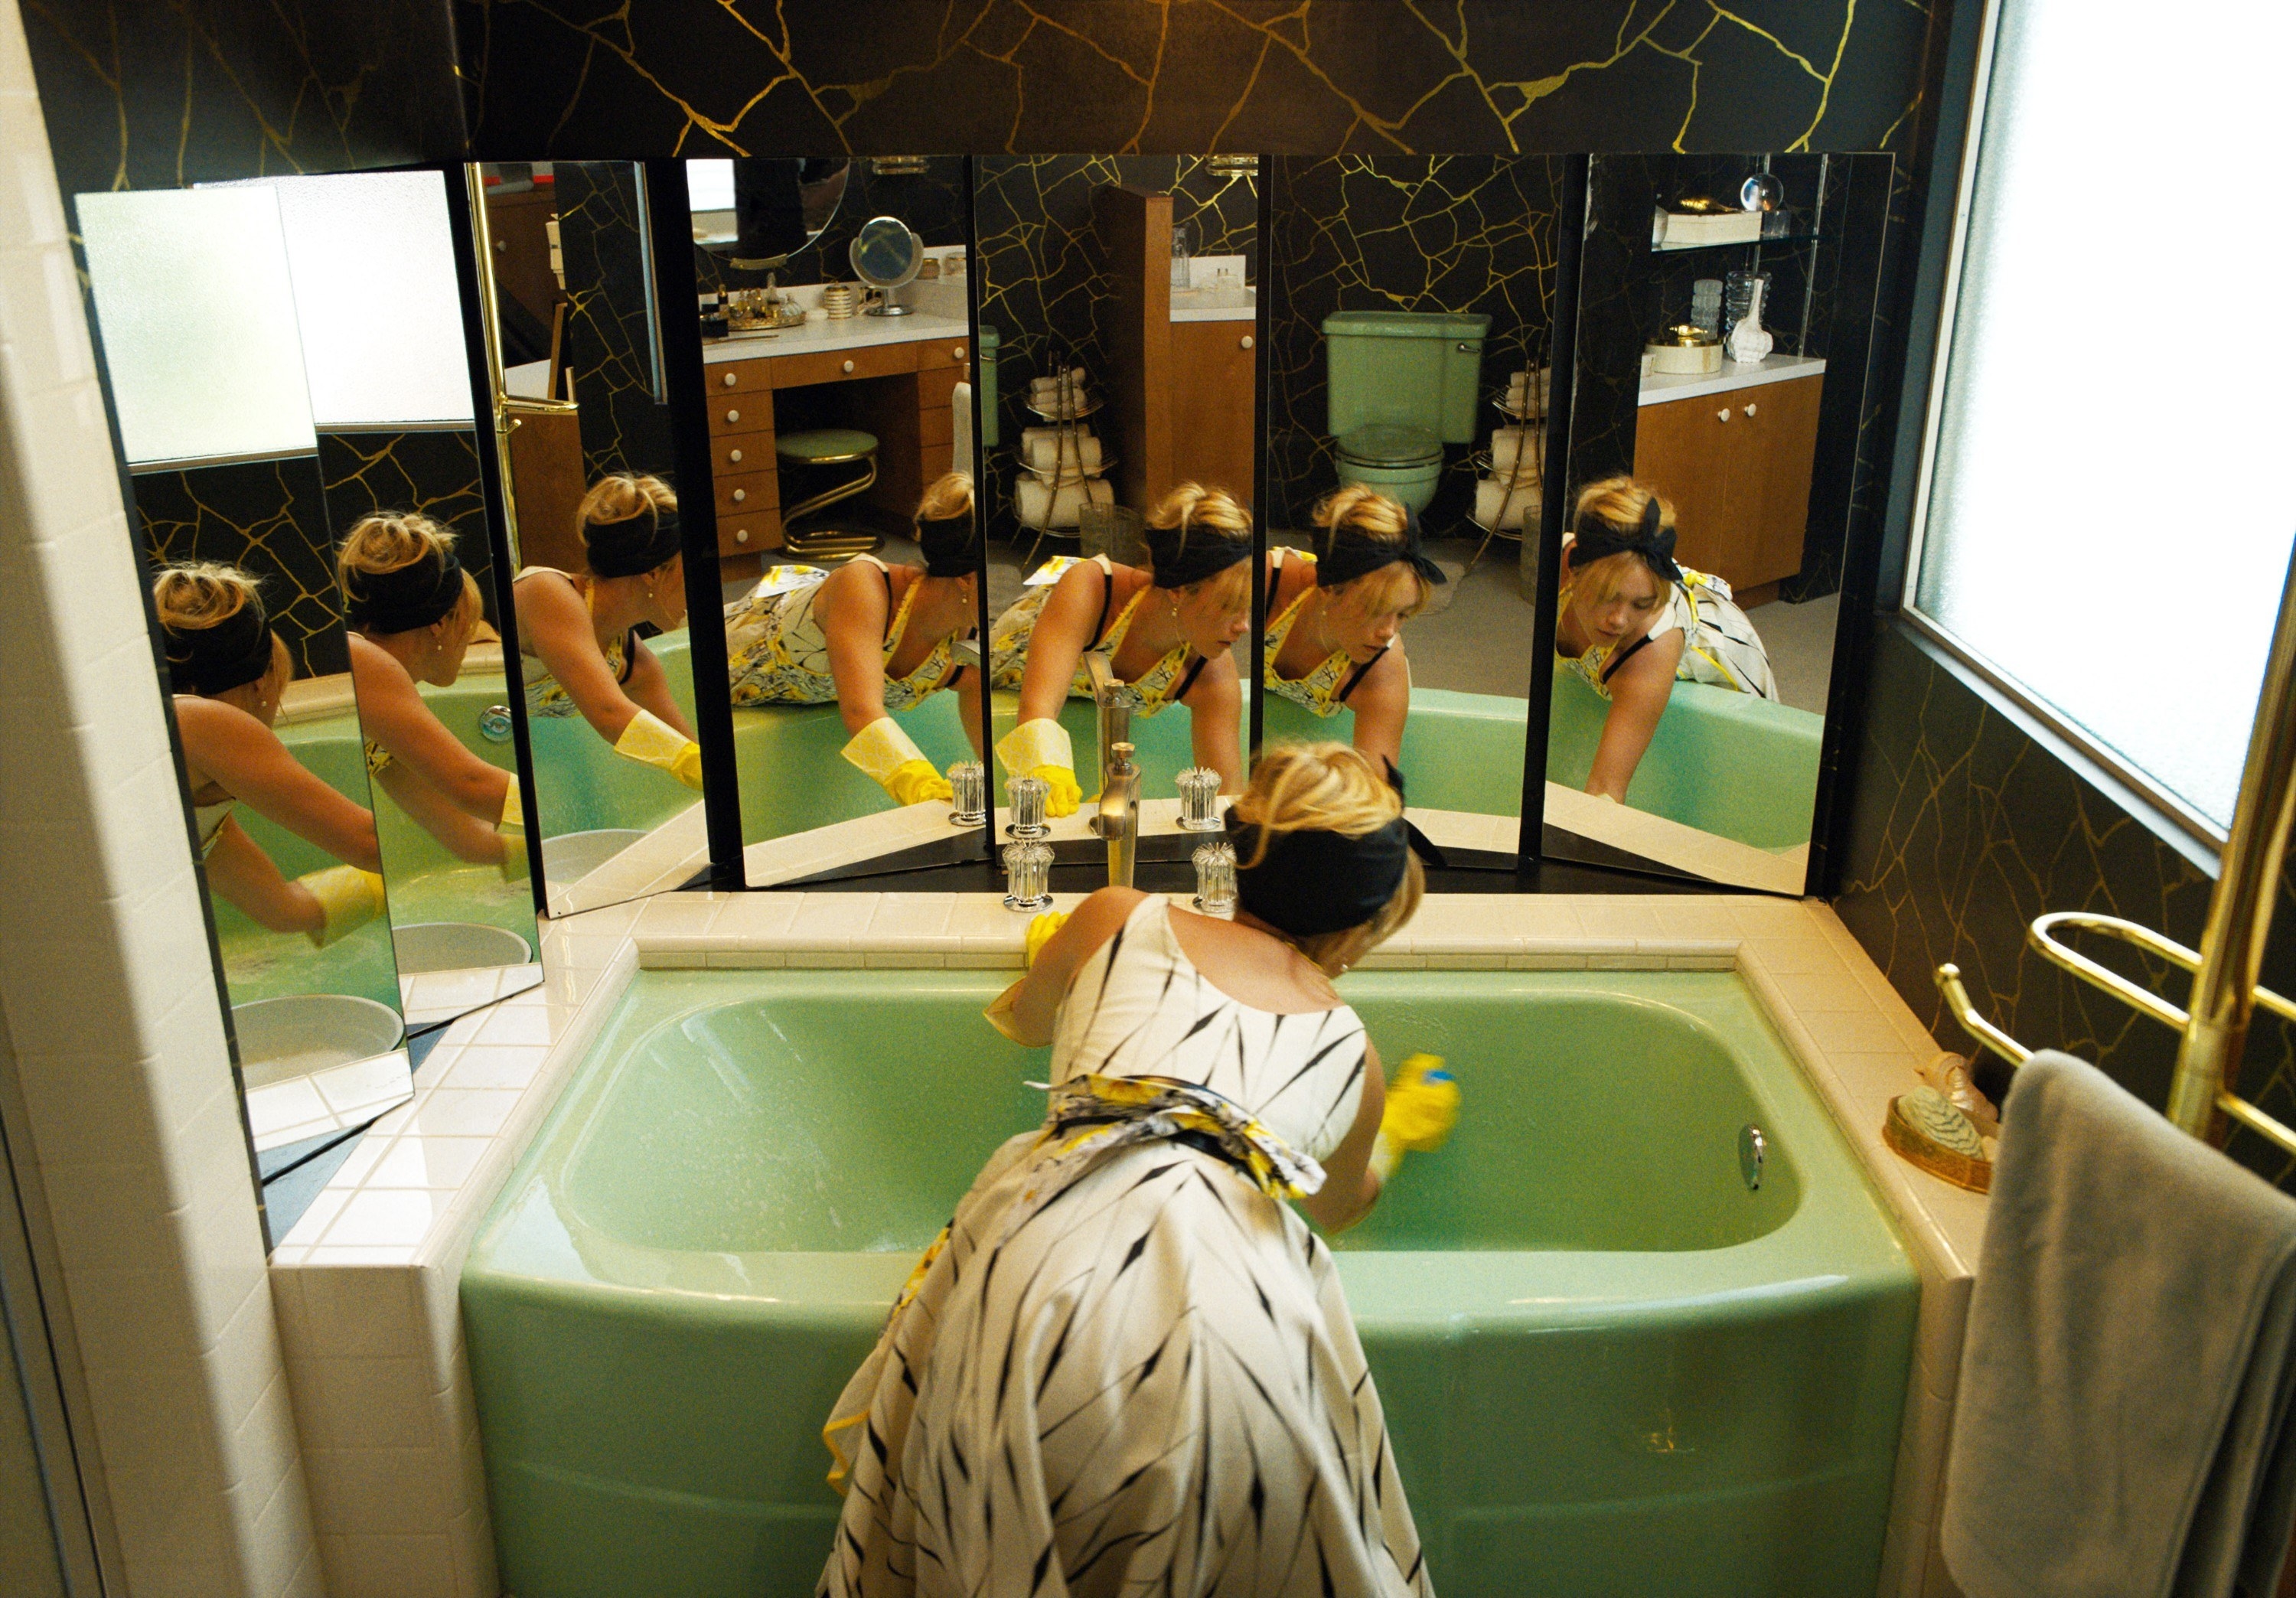 Alice scrubbing a bathtub that has several mirrors behind it